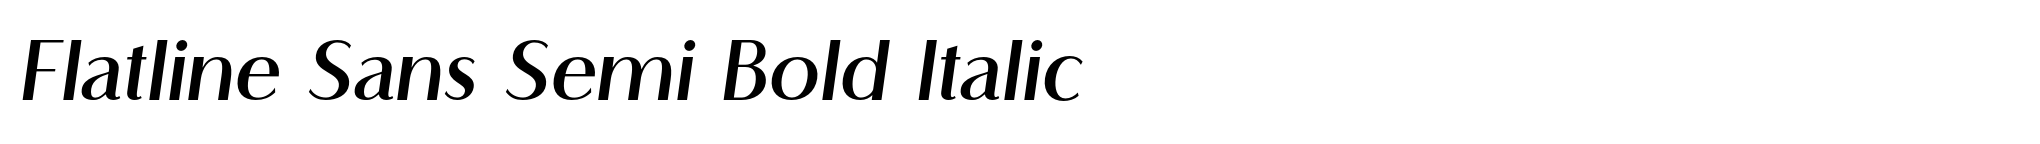 Flatline Sans Semi Bold Italic image